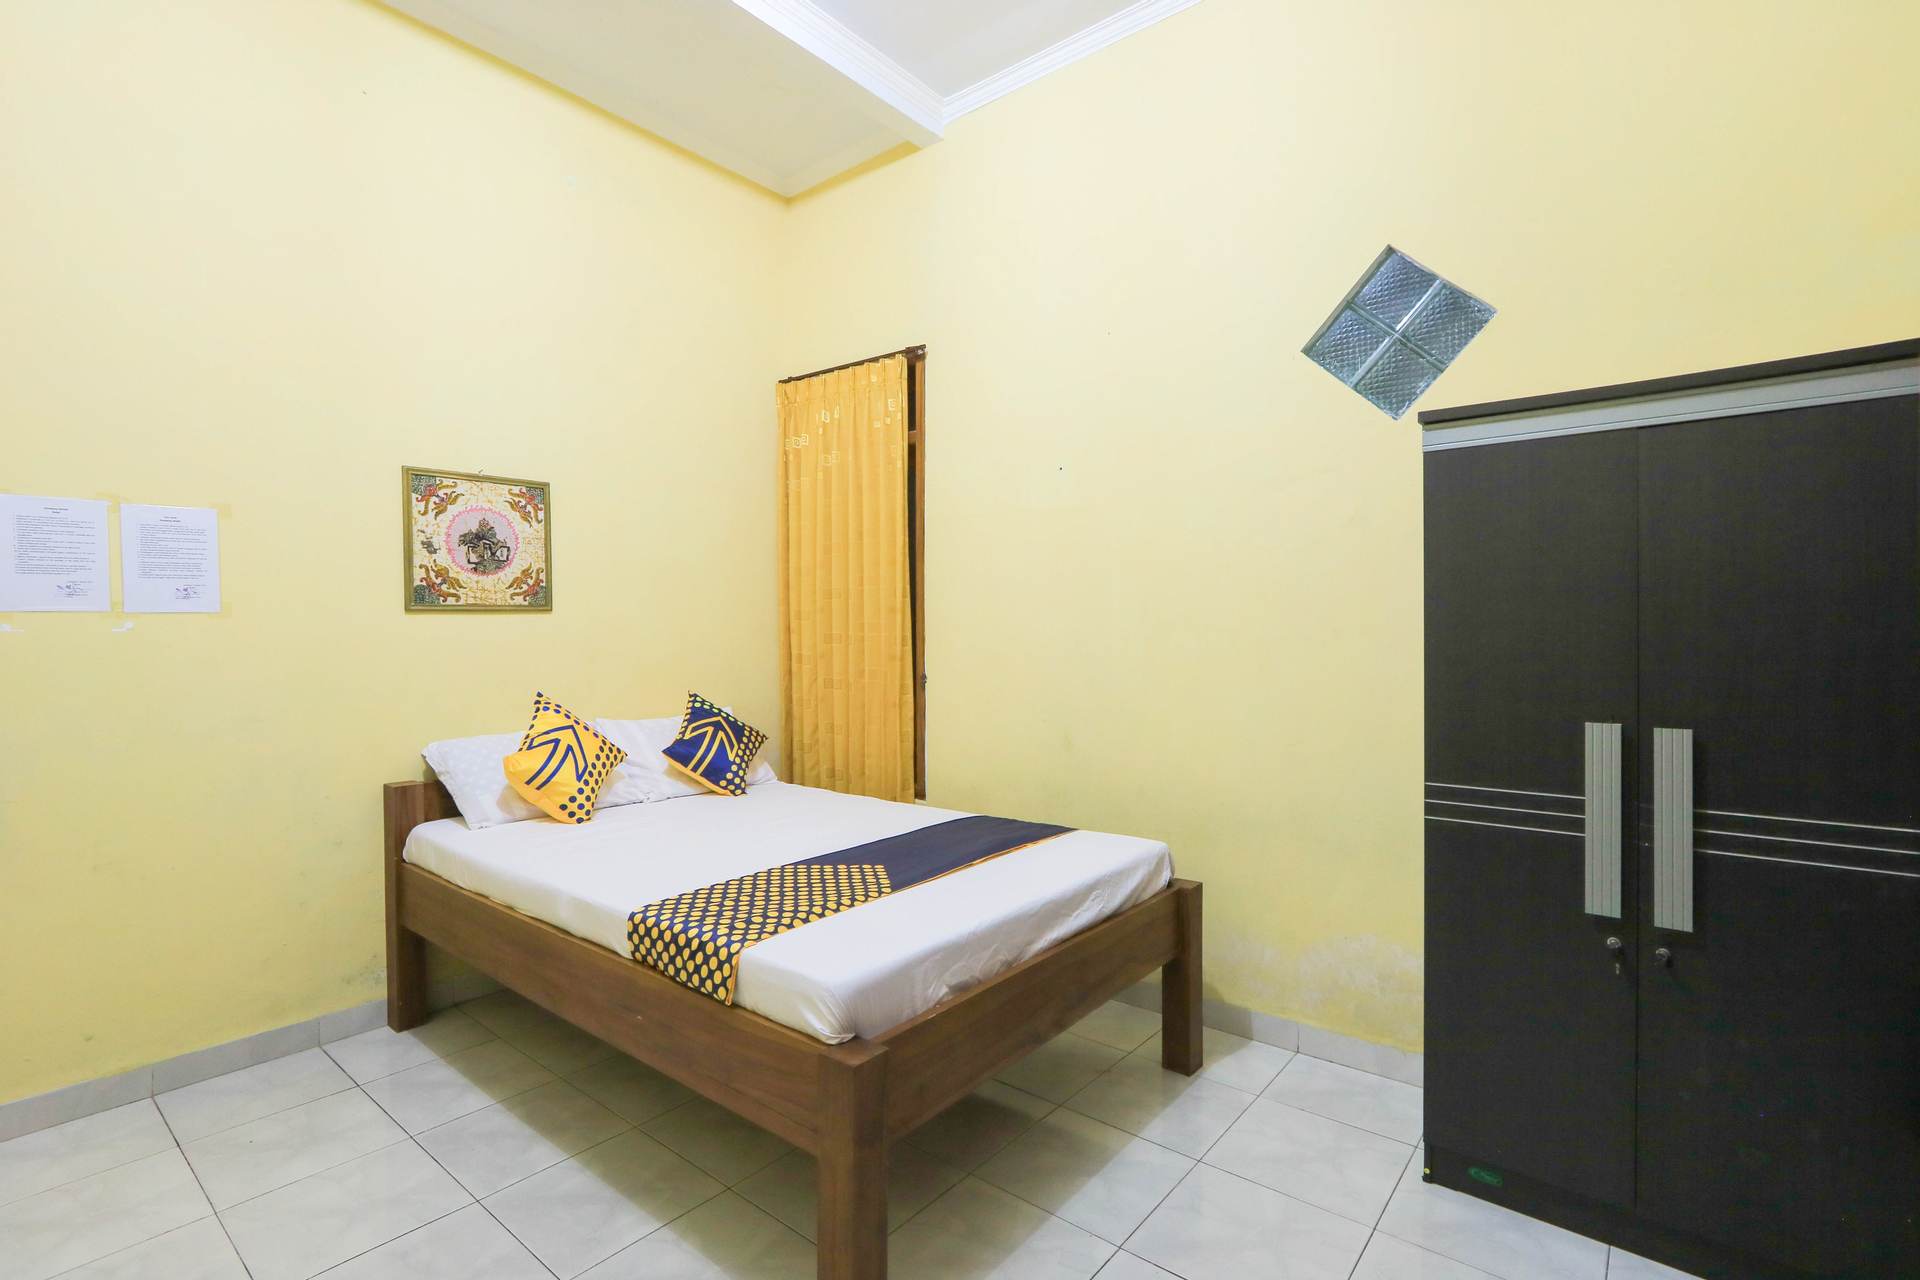 Bedroom 1, SPOT ON 2440 Wallet Family Residence Syariah, Lumajang